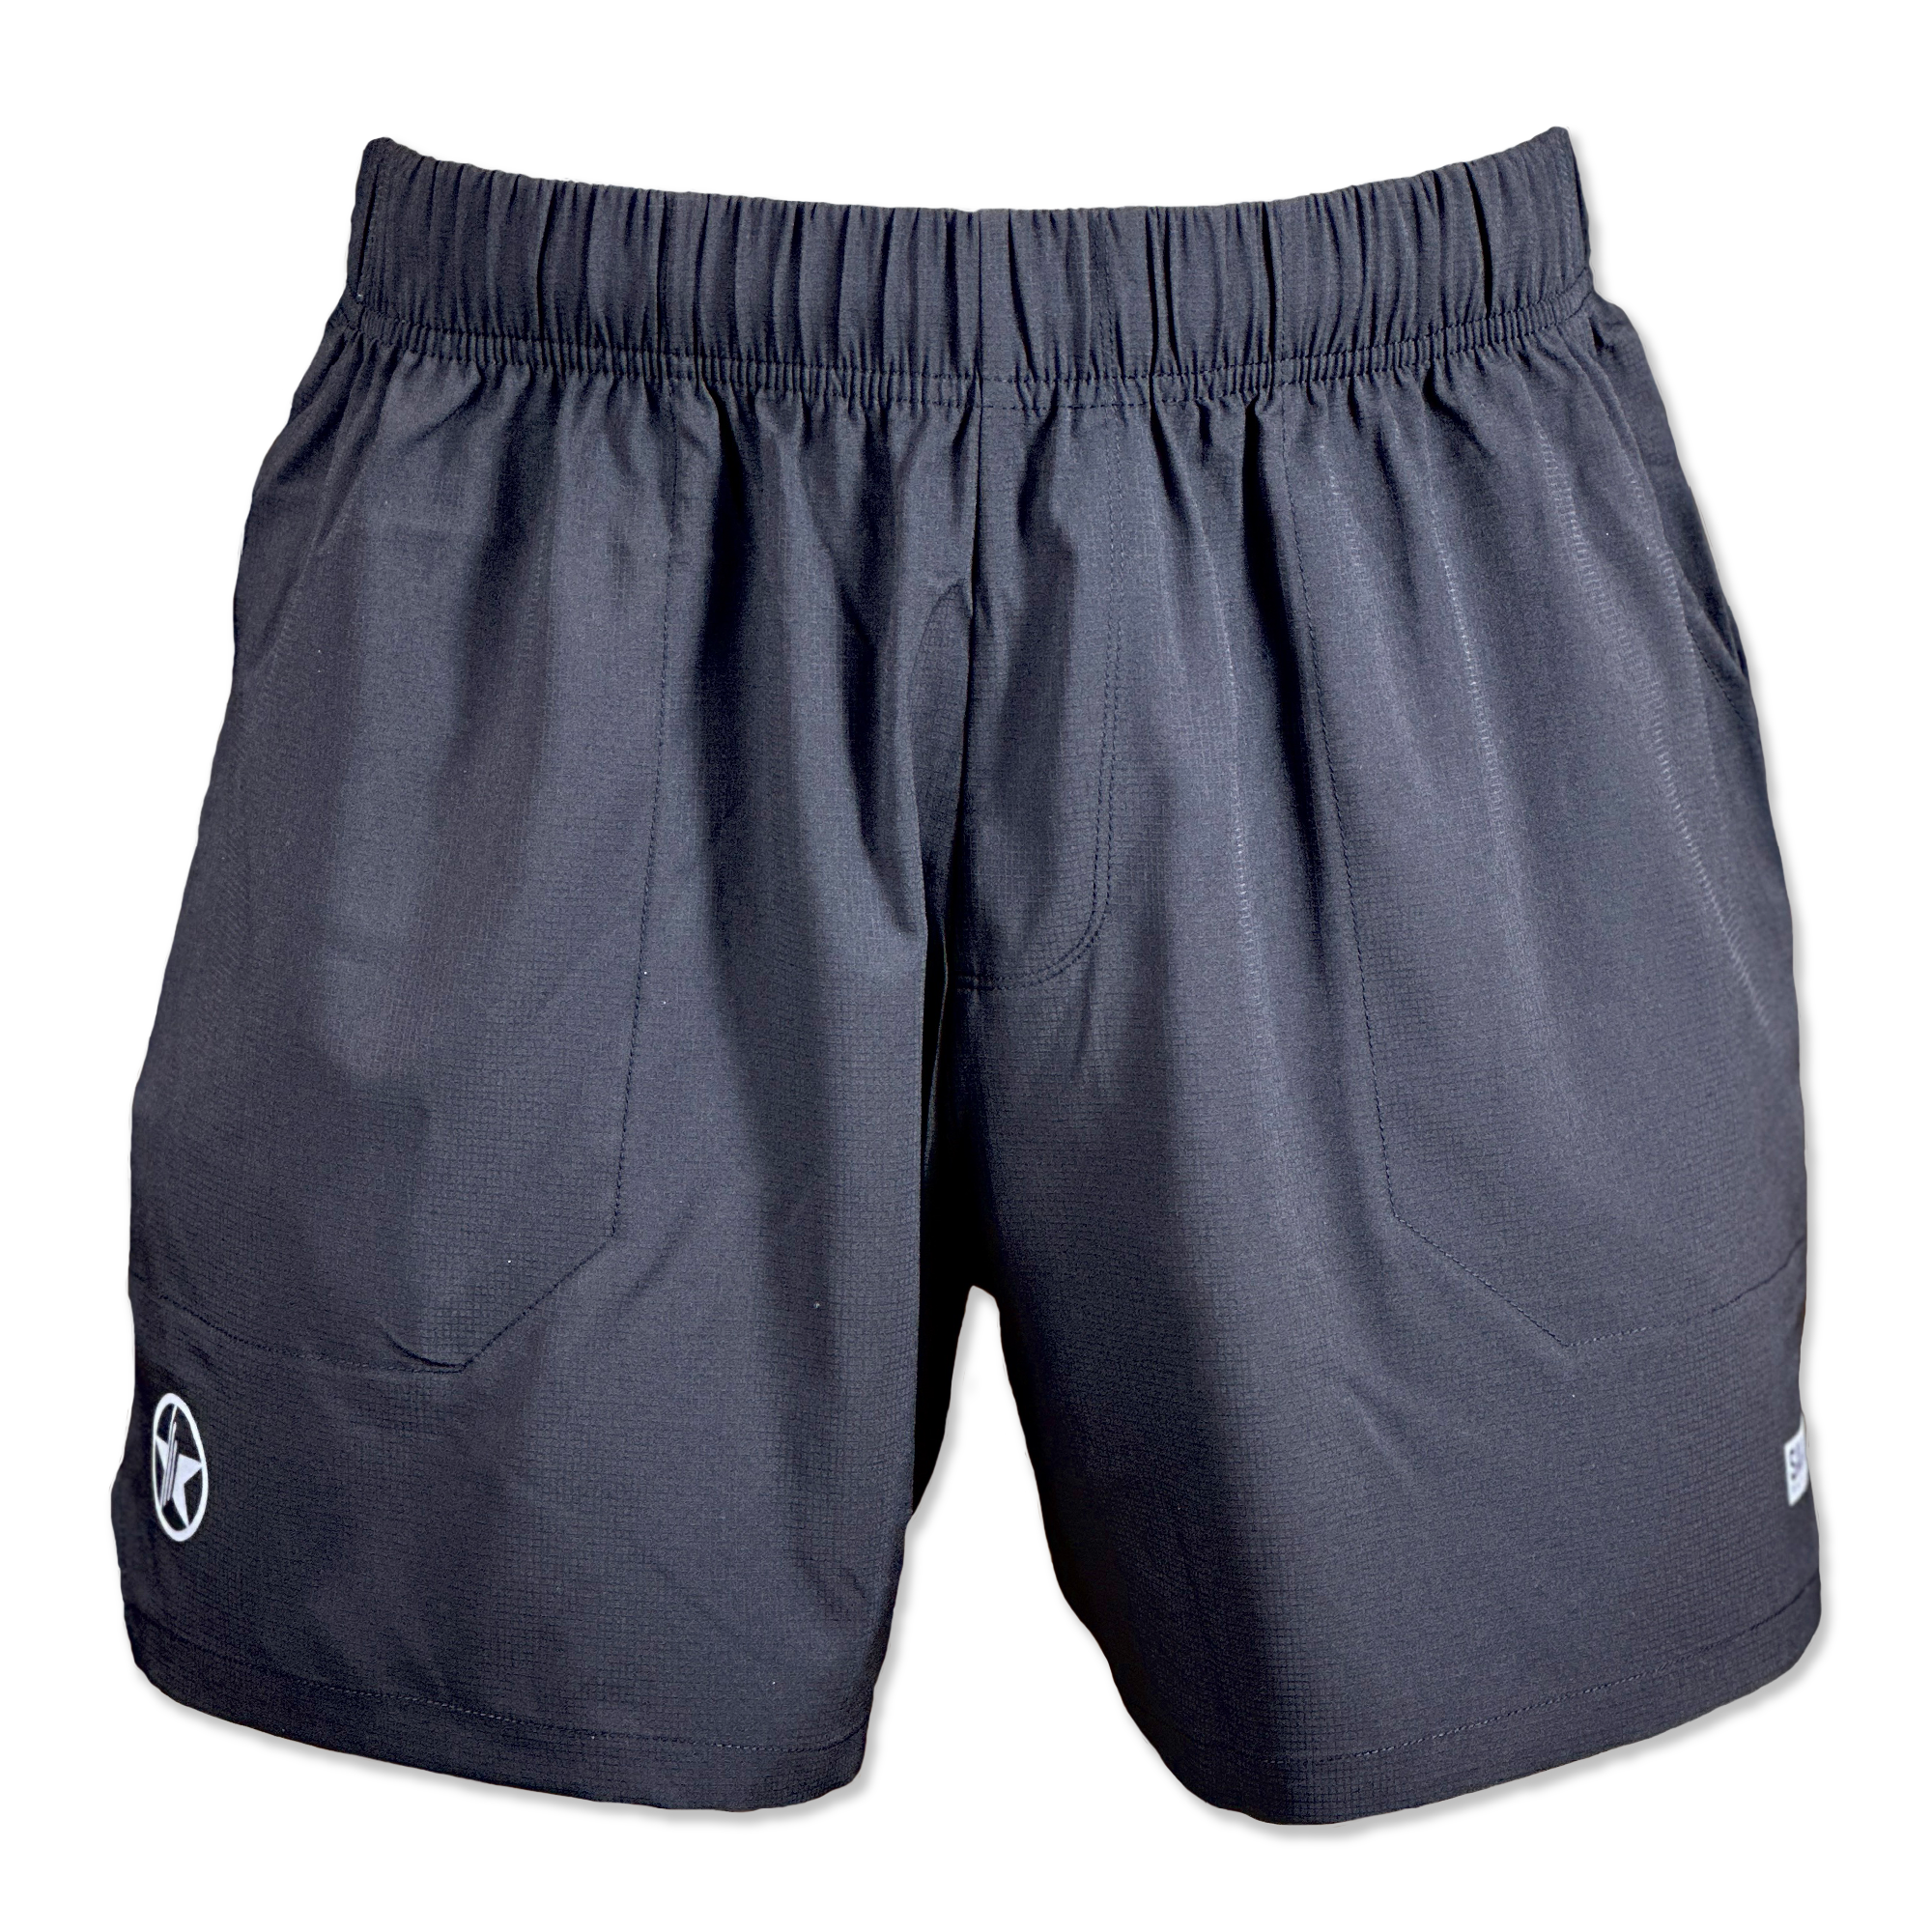 Men's Shorts - Competition 3.0 - Black, 2X-Large / Black product